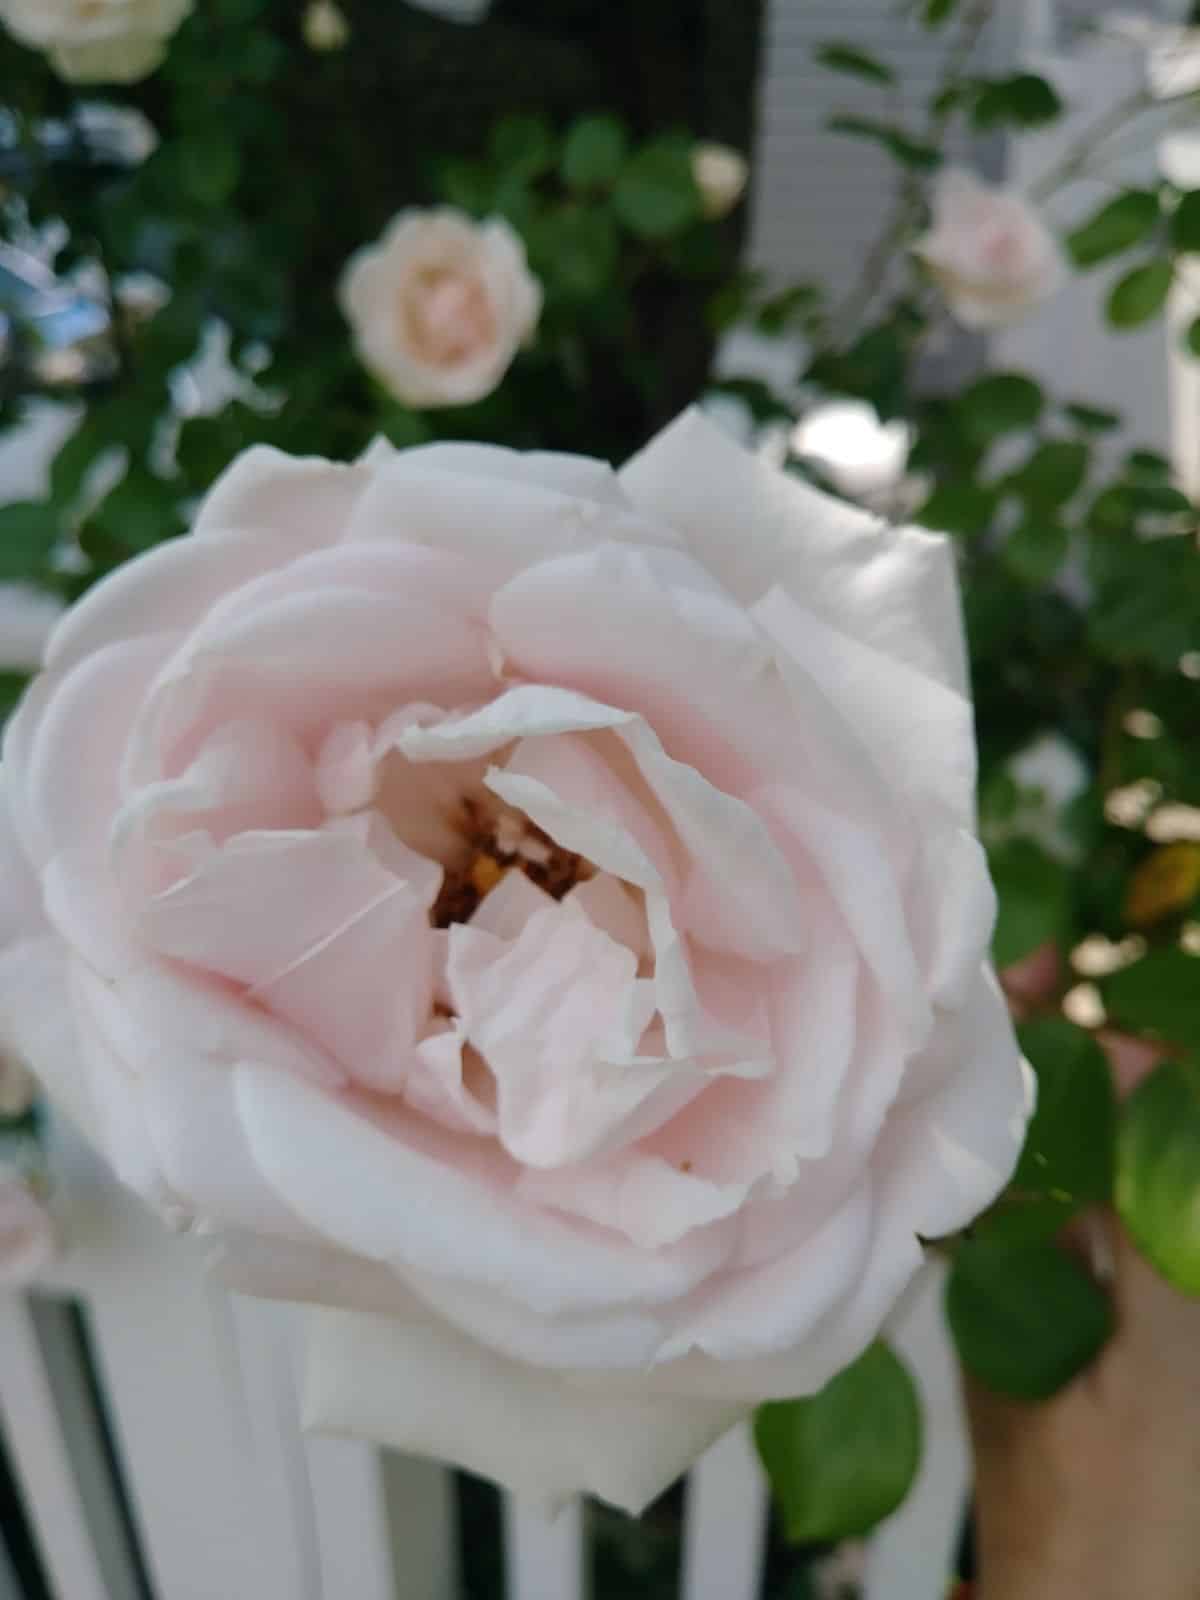 A beautiful rose blossom